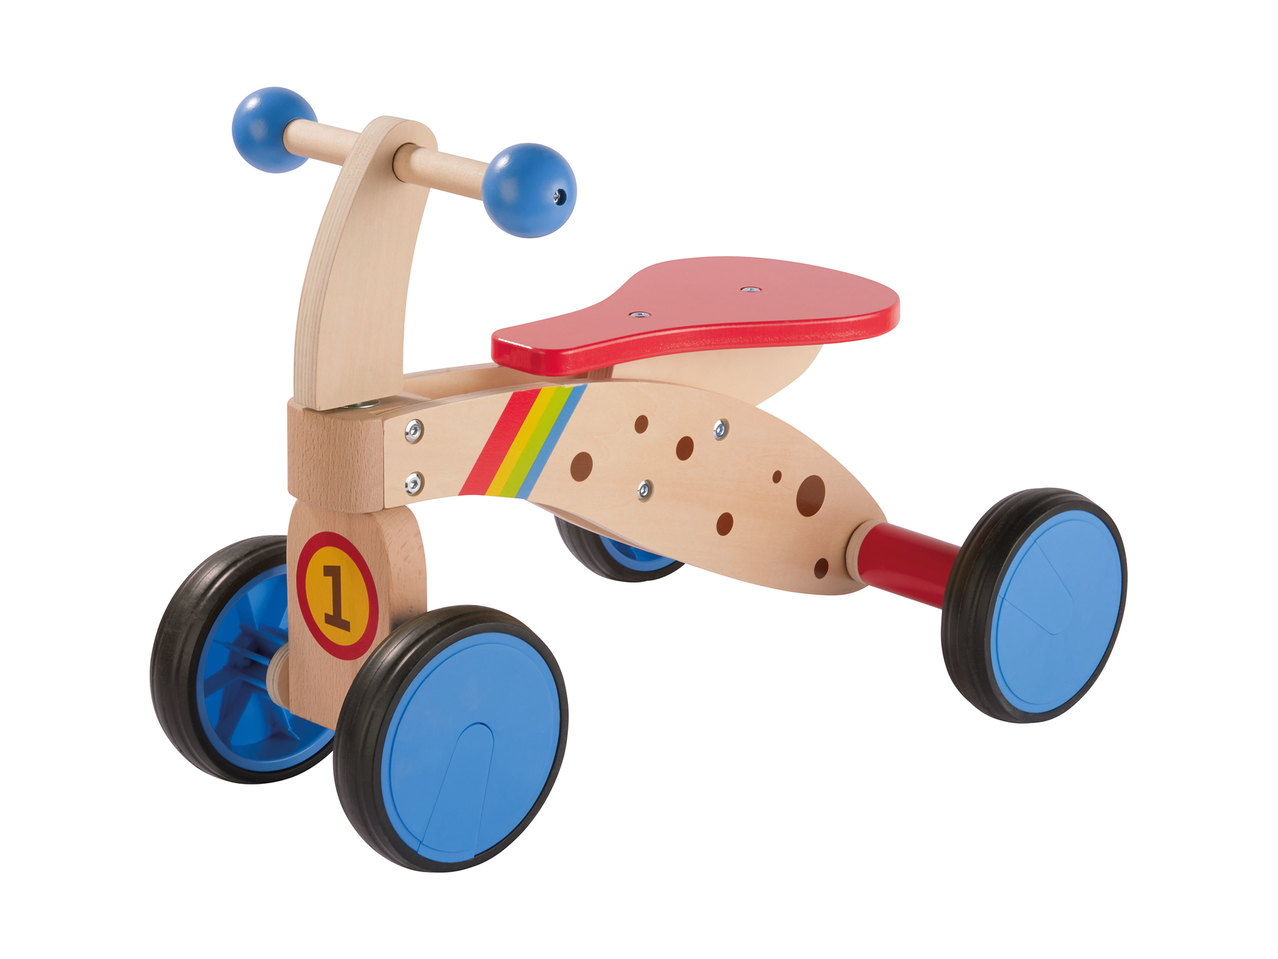 Playtive Junior Wooden Trike or Wooden Rocking Horse1